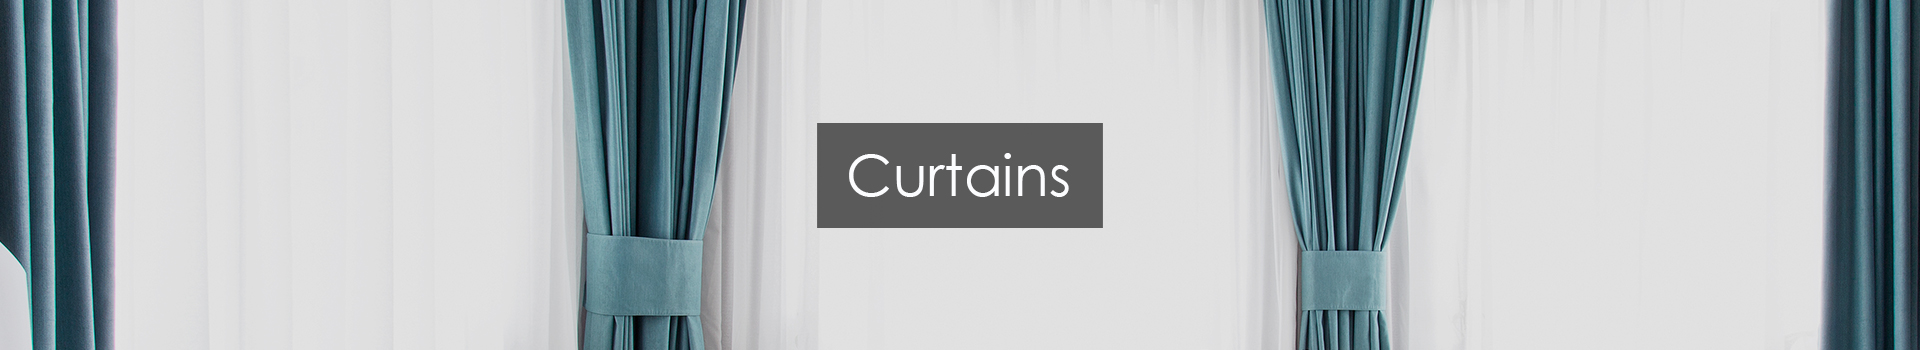 Best Curtains in Dubai & Abu Dhabi